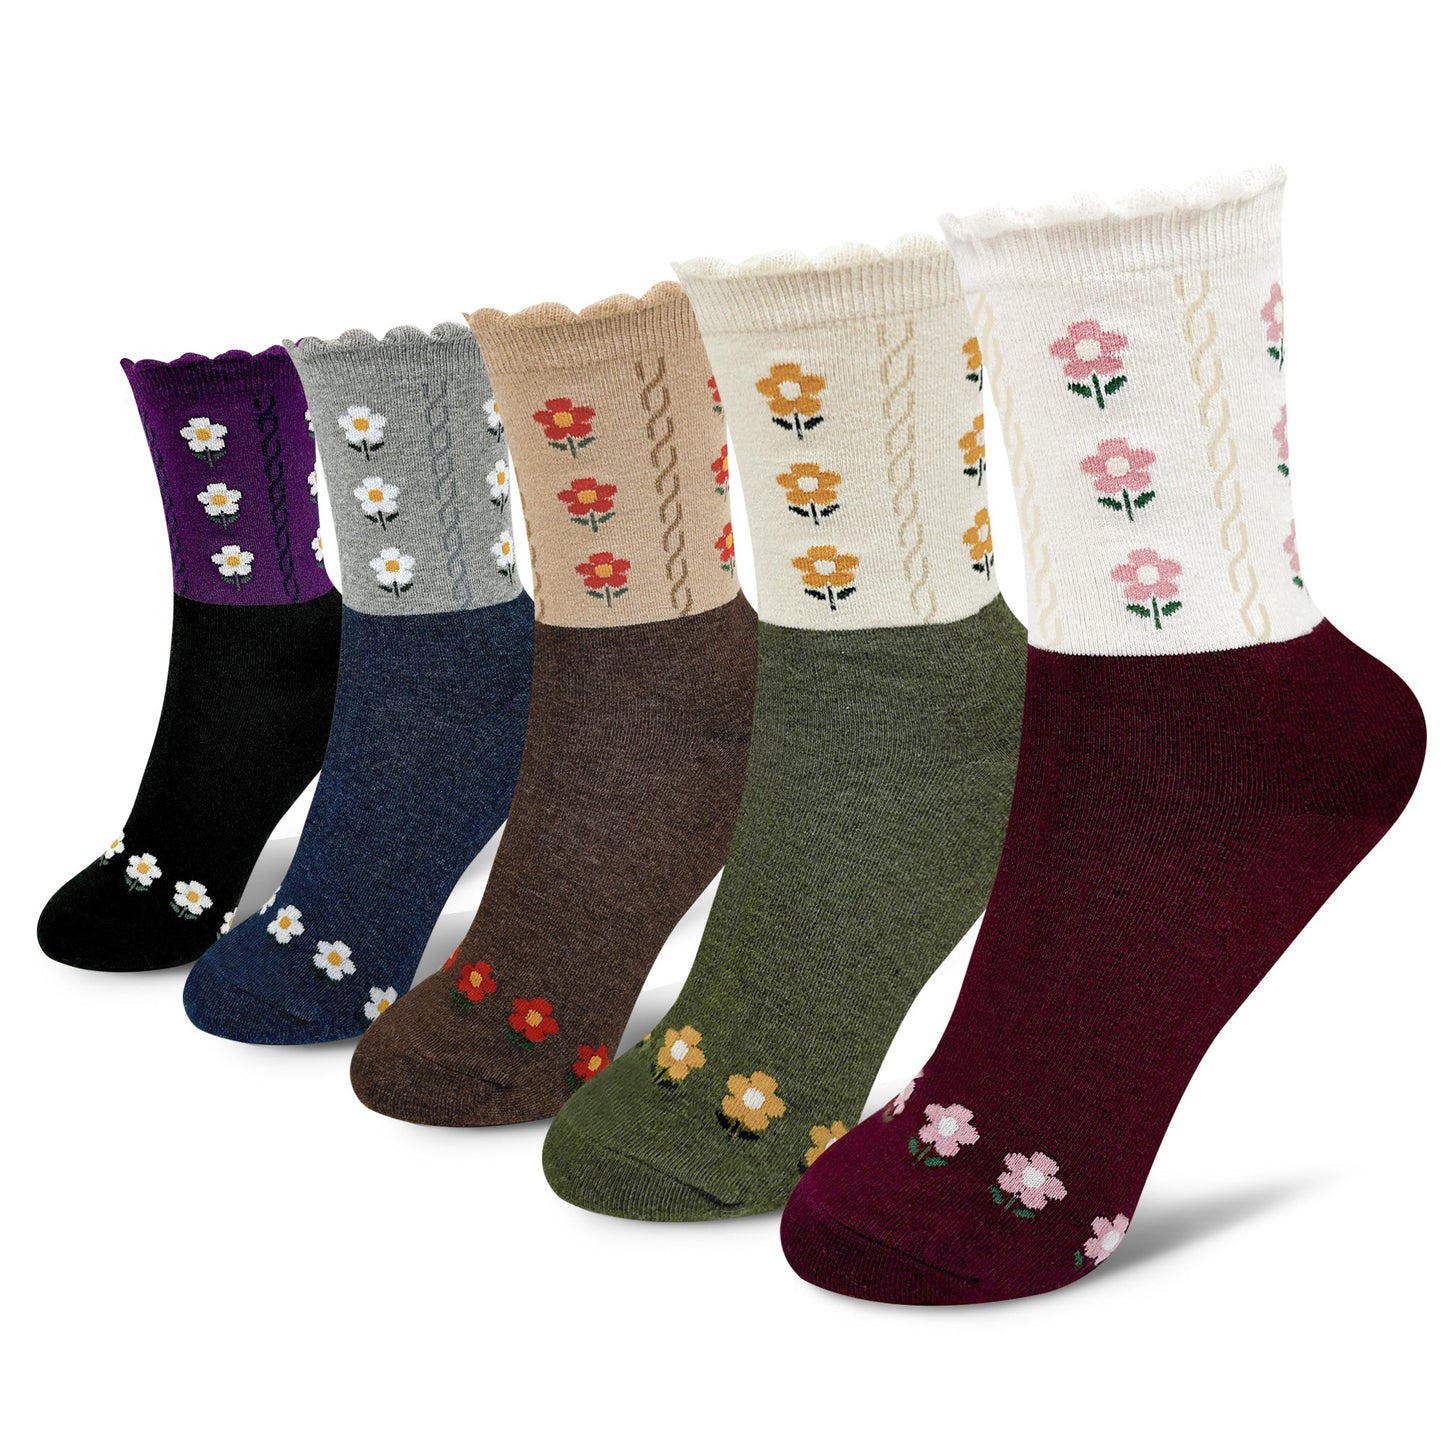 Women's Picot Flower Pattern Crew Socks - 5 PK